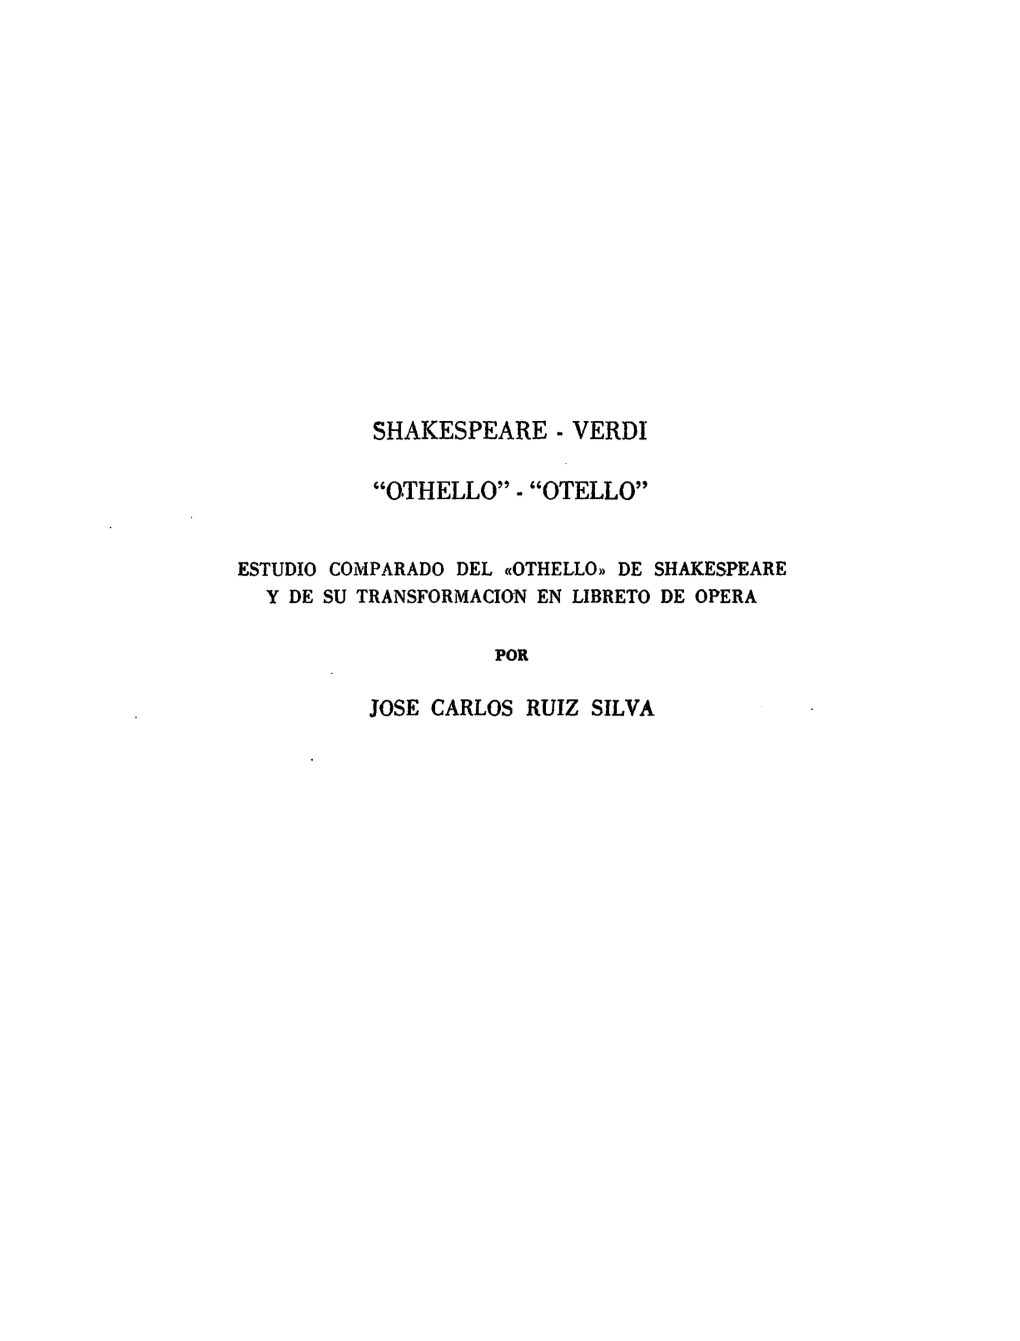 Shakespeare - Verdi